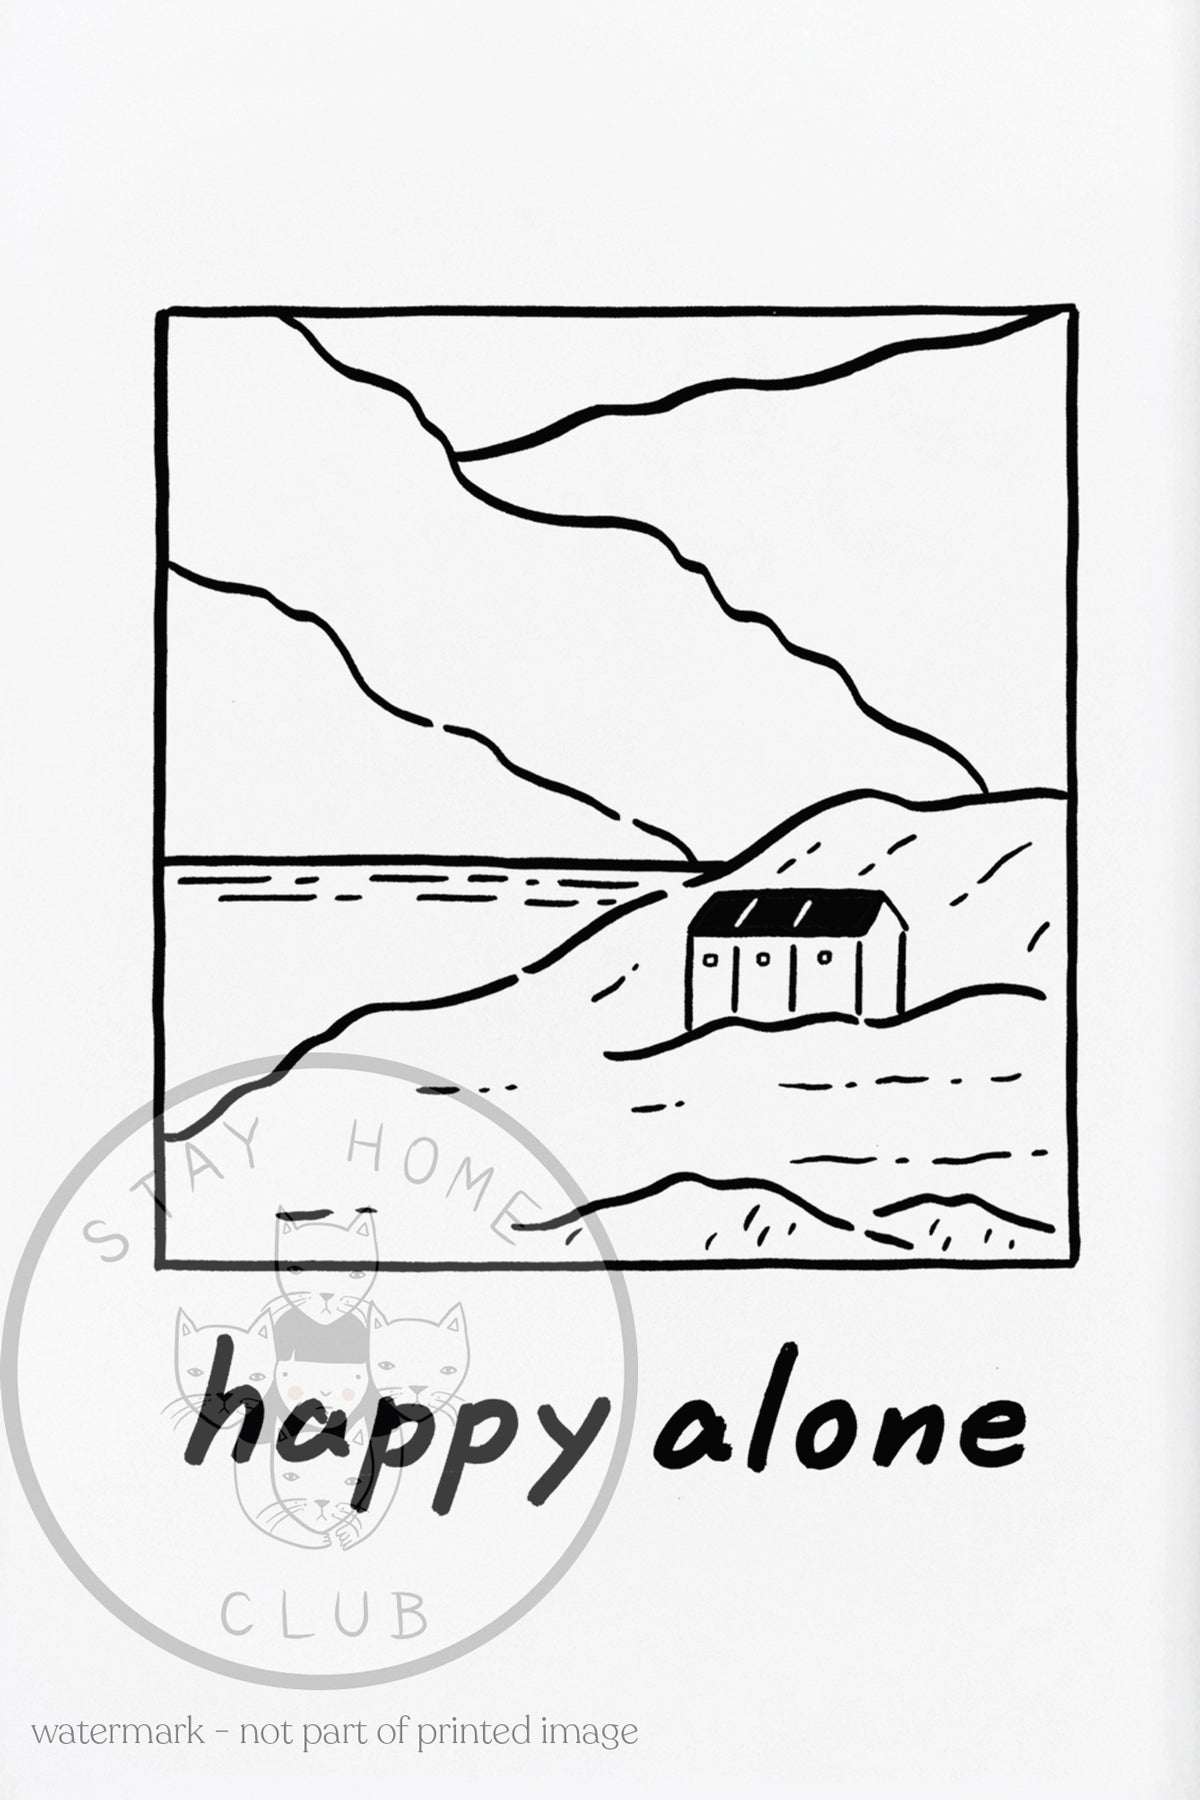 Happy Alone Print